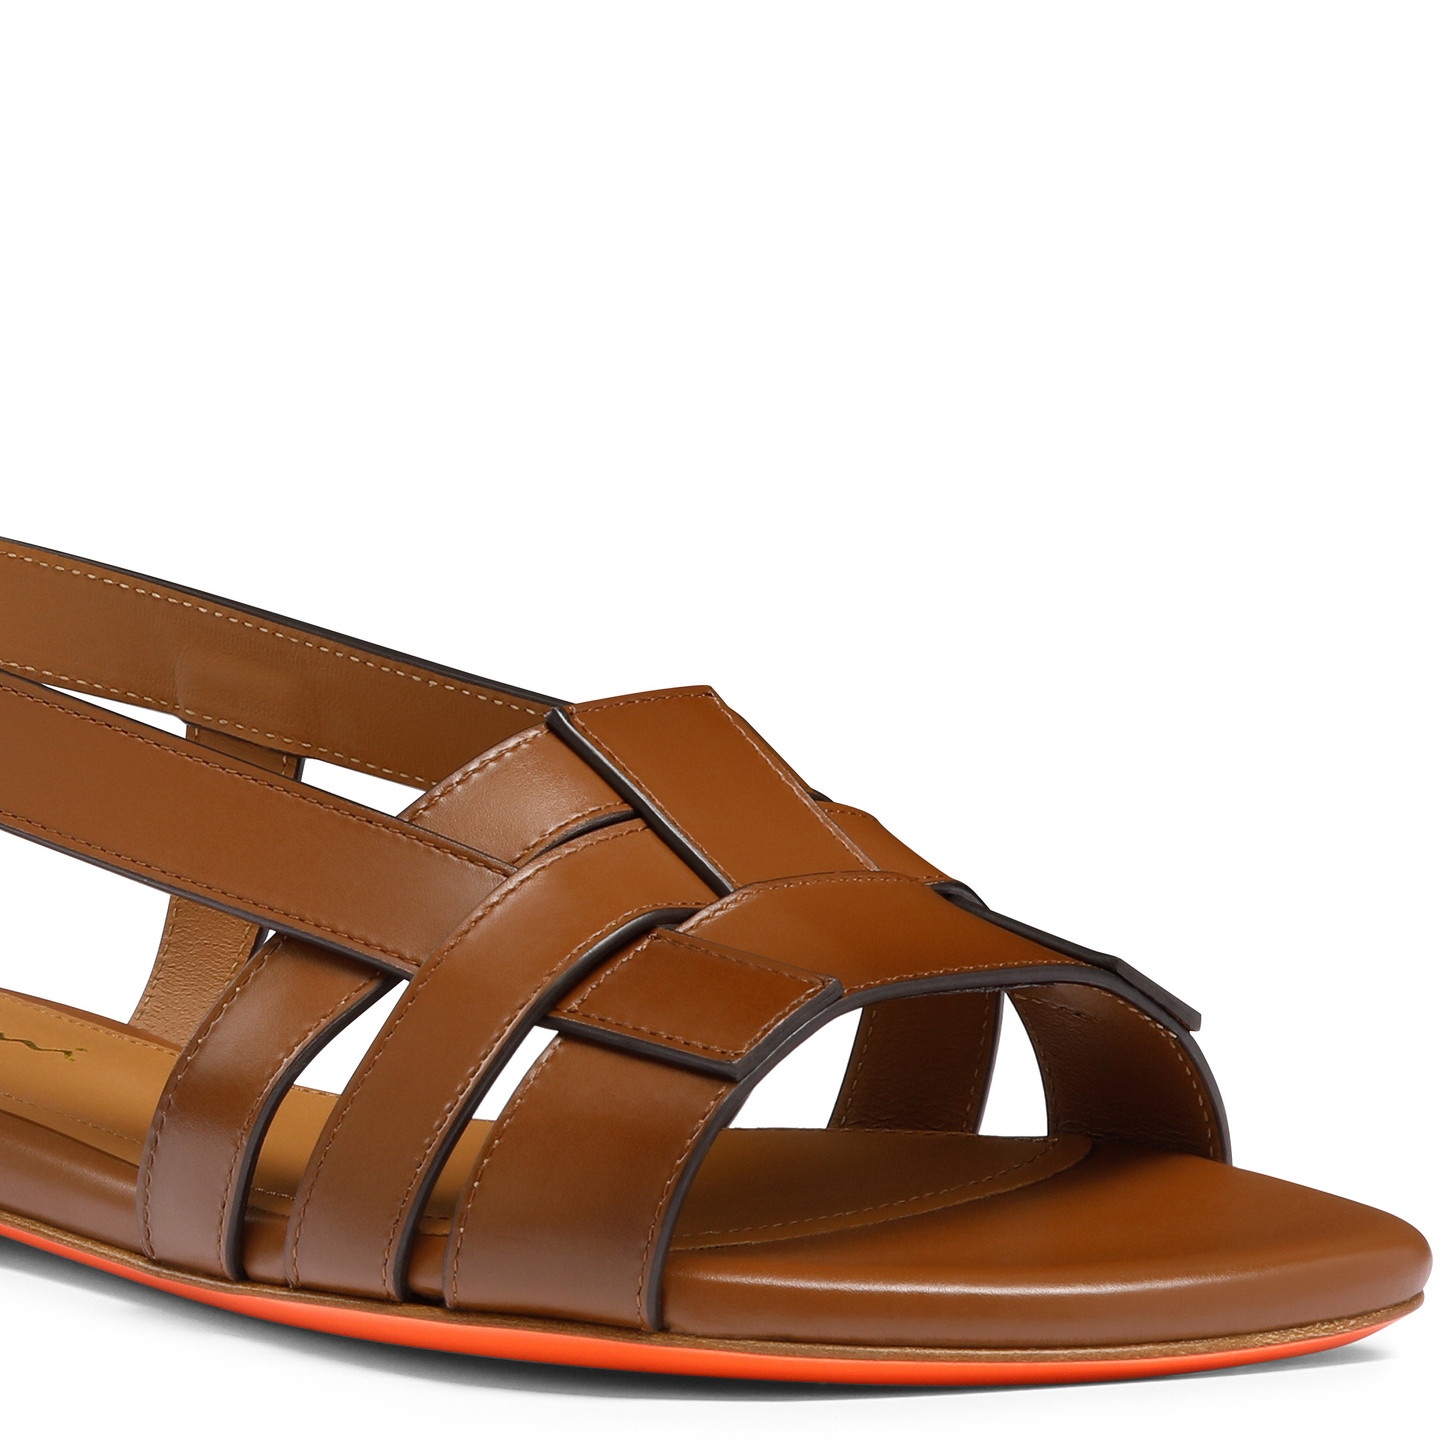 Women's brown leather Beyond sandal - 6